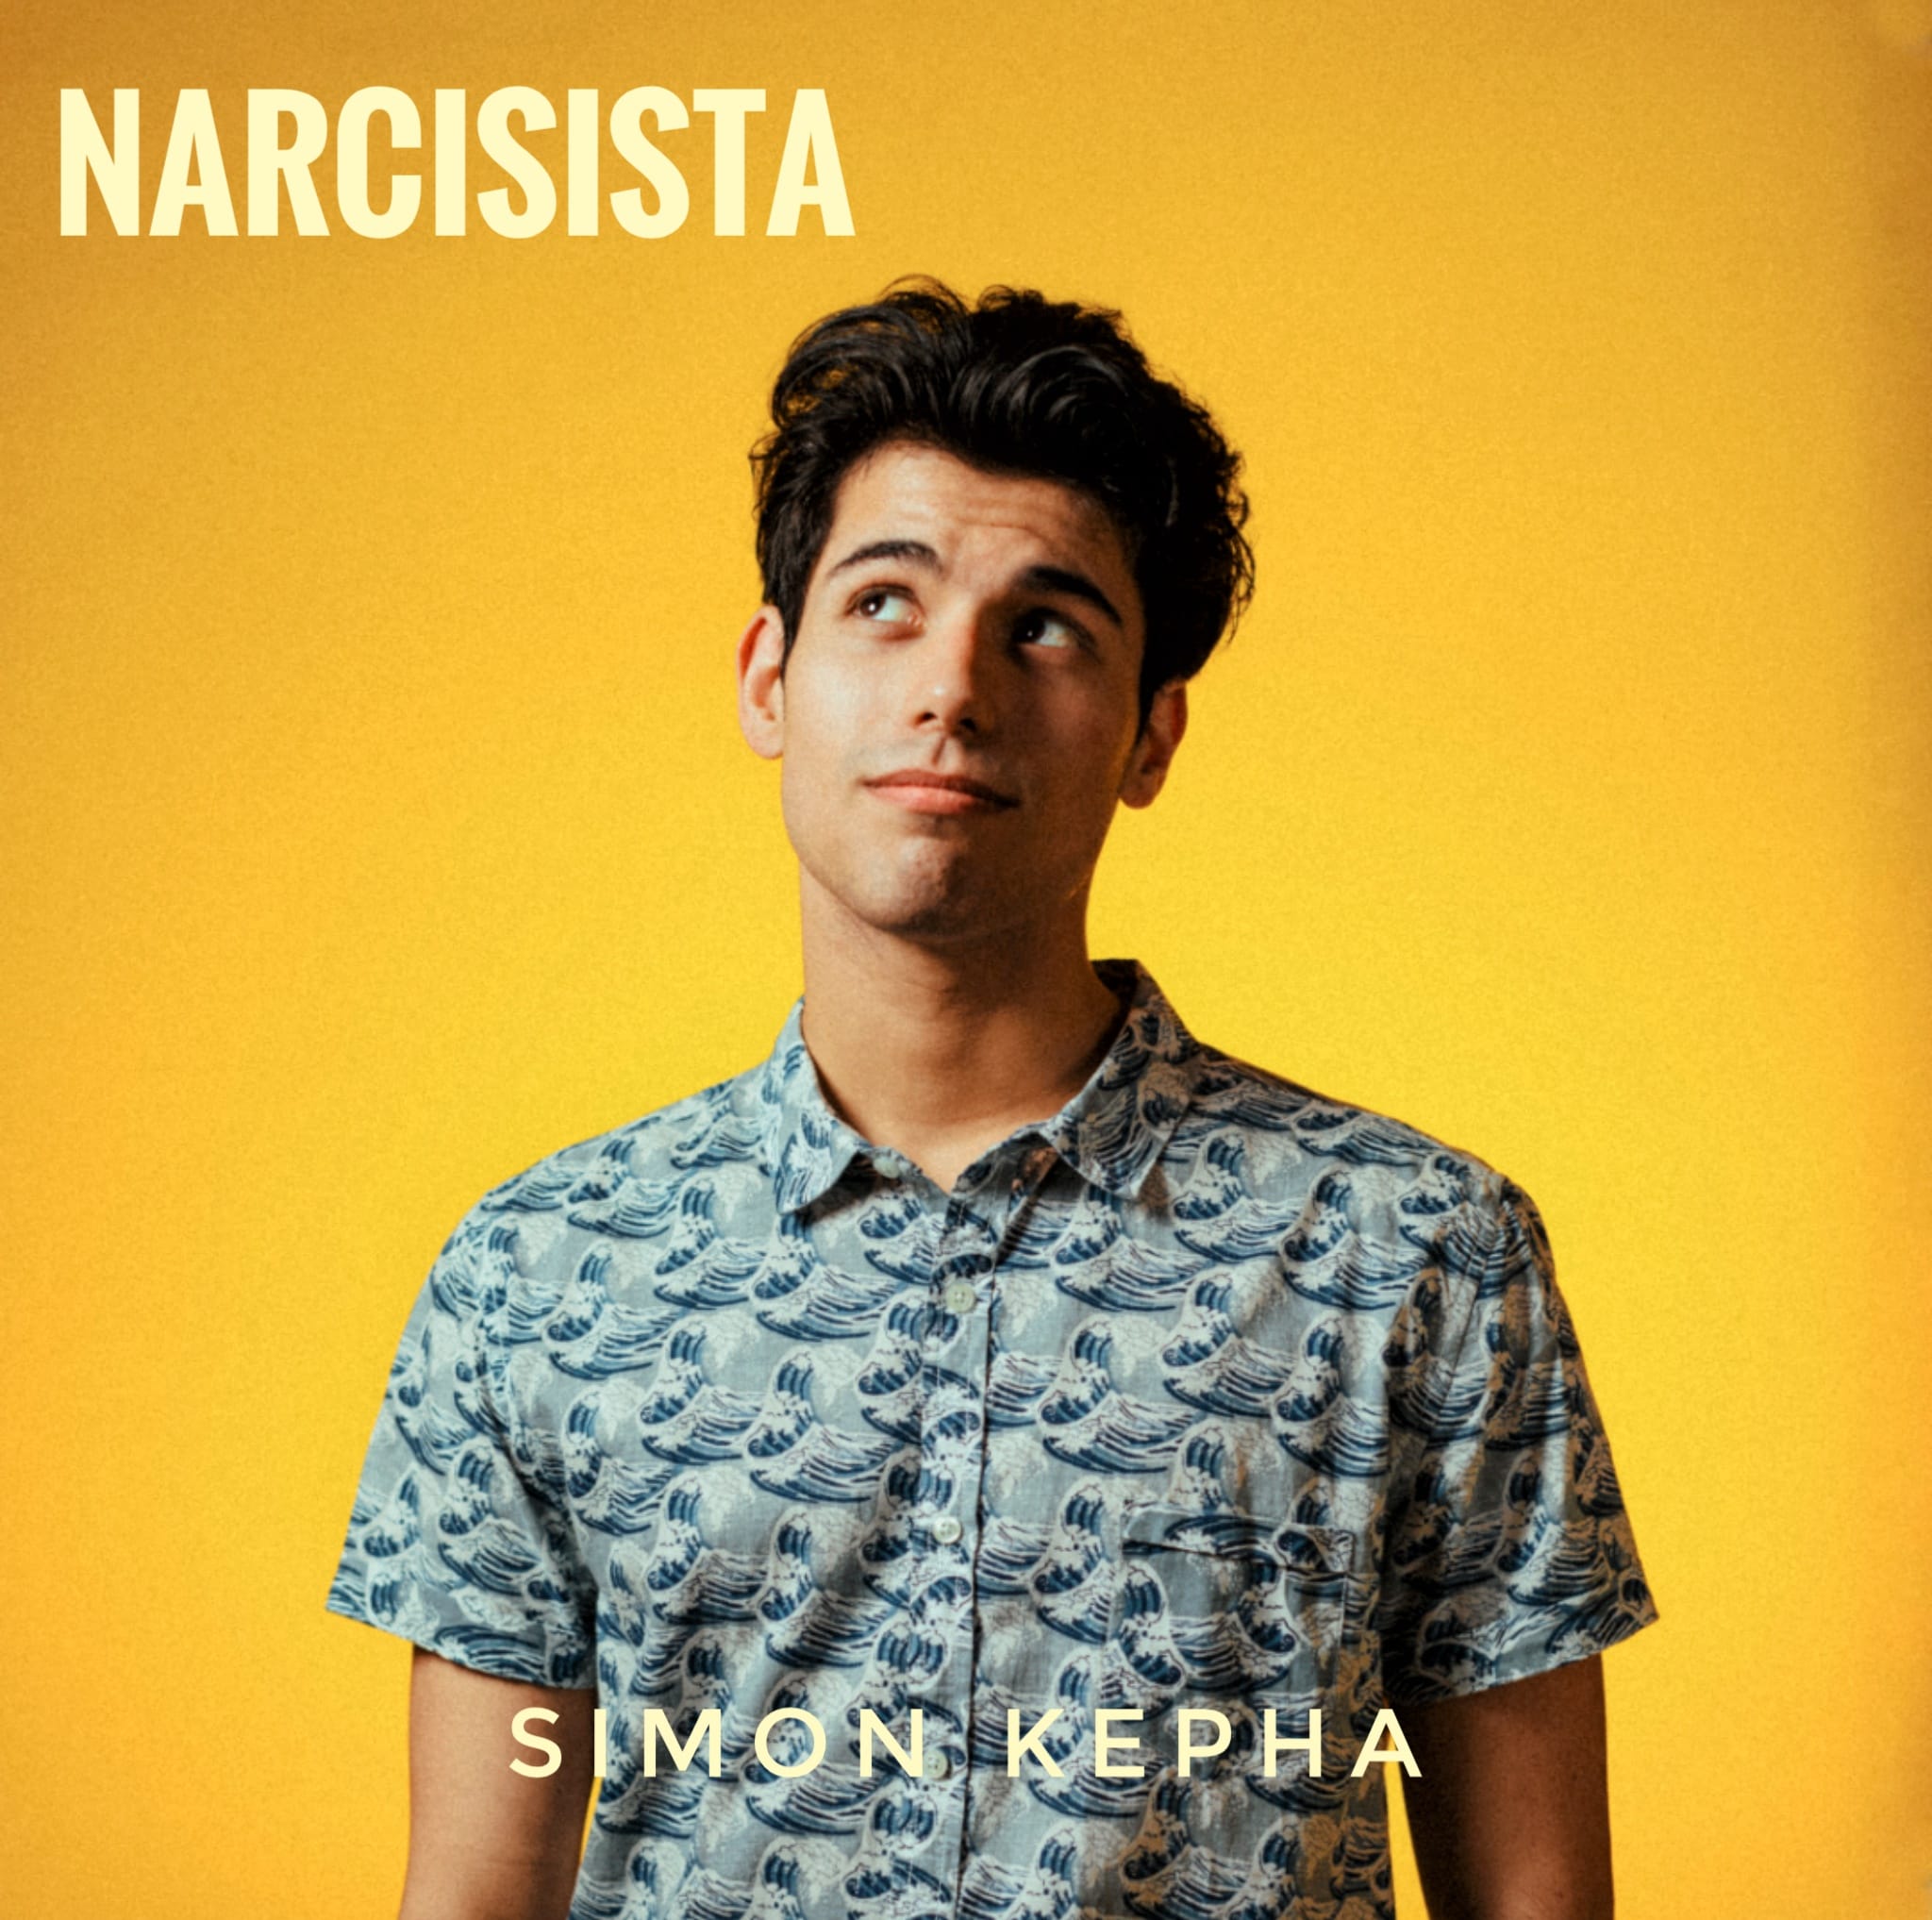 “Narcisista” il singolo di Simon Kepha